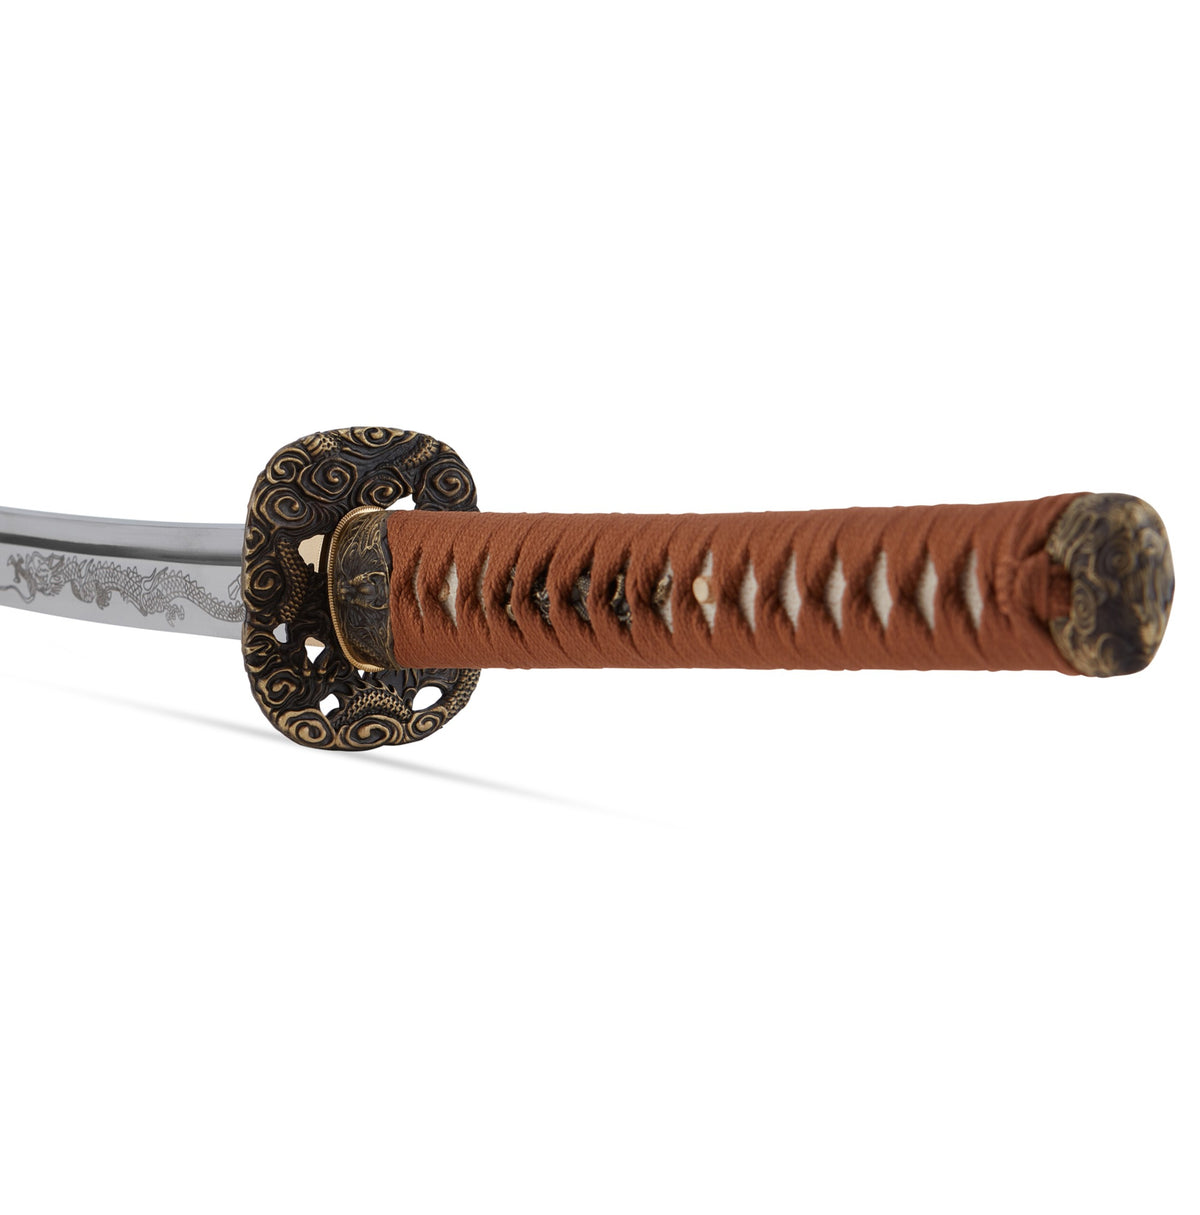 Katana sword with dragon engraving on blade and dragon saya carving. Brown accent colors